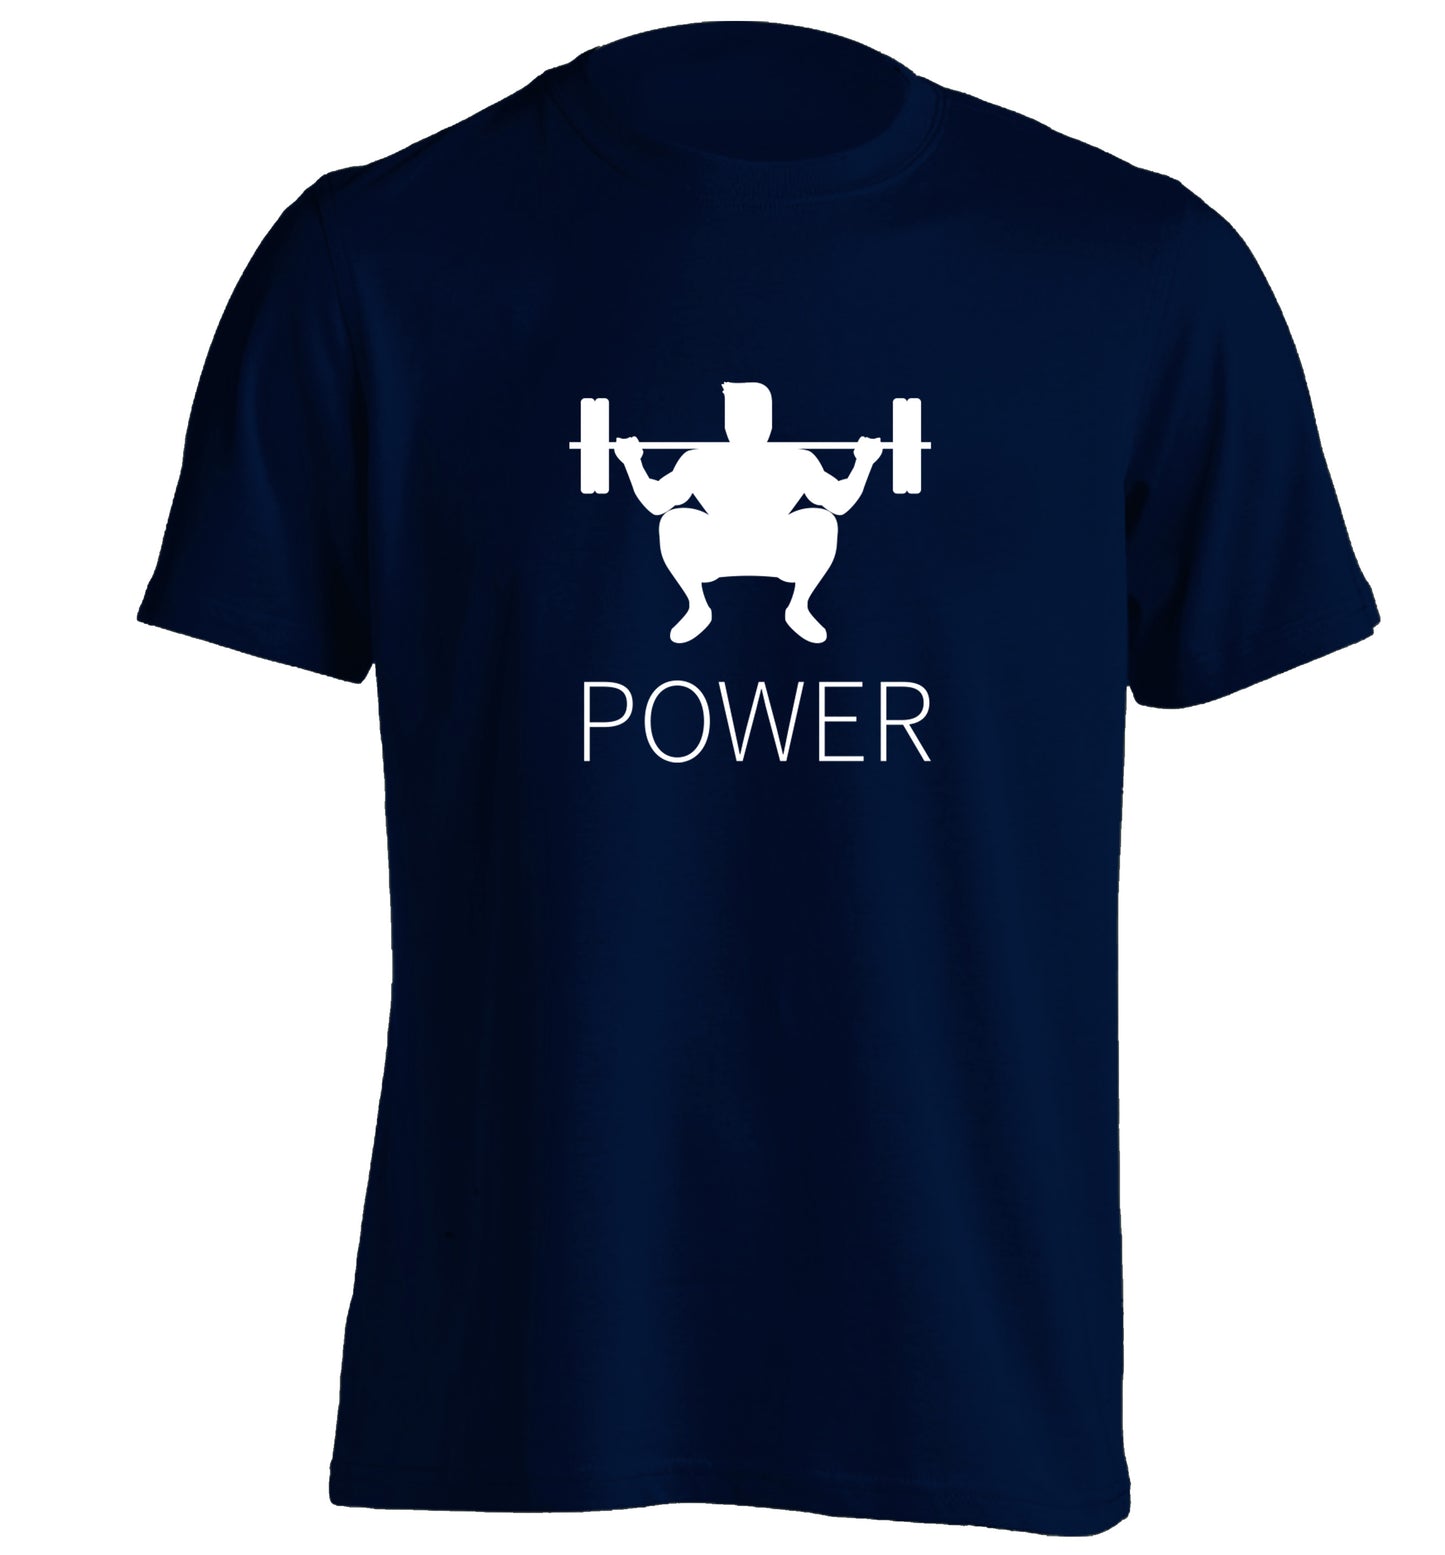 Lift power adults unisex navy Tshirt 2XL